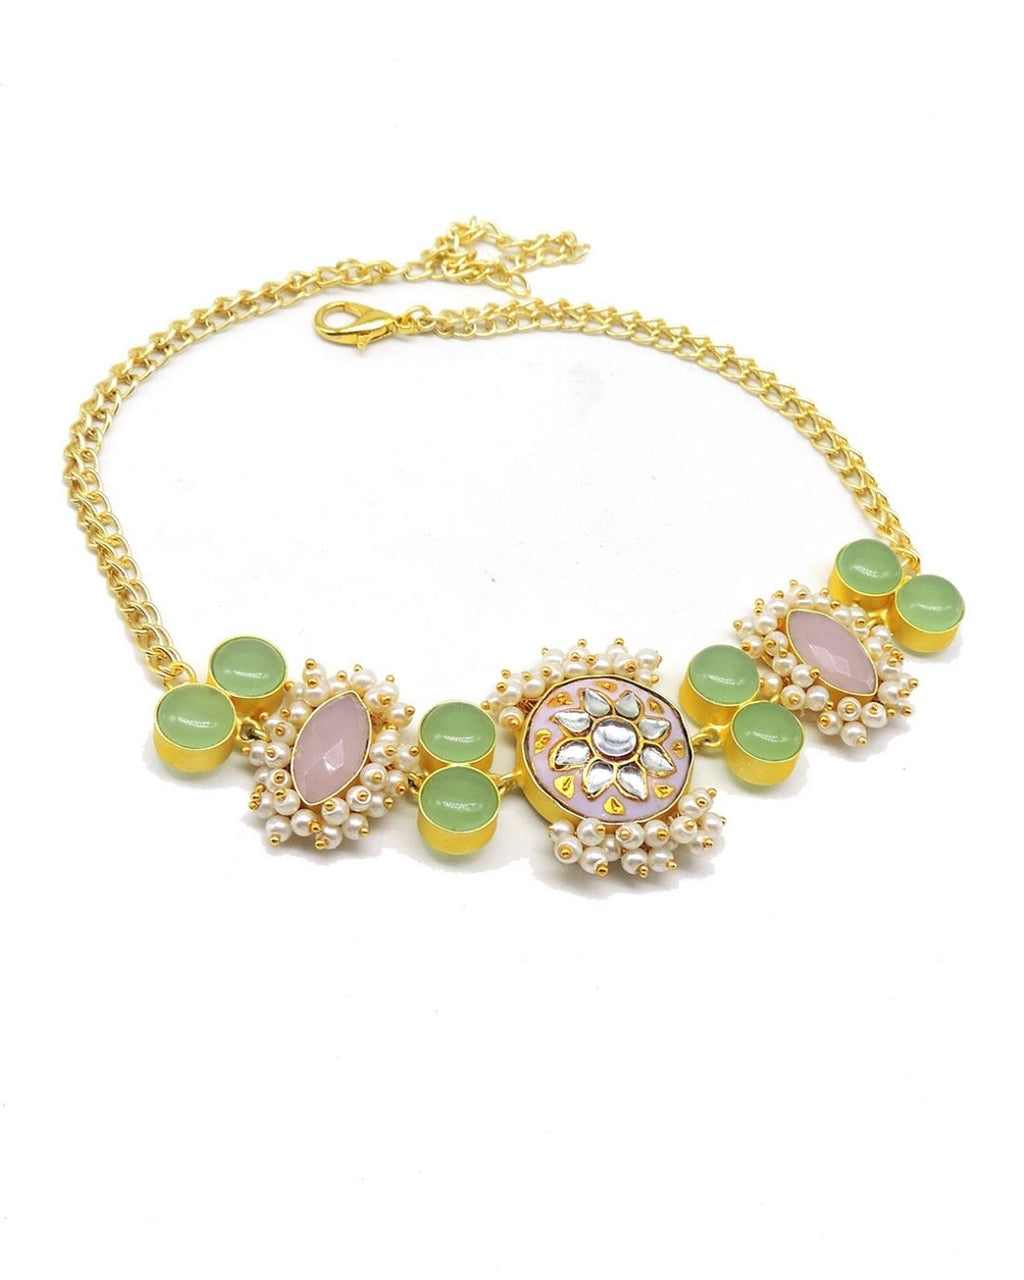 Mevala Choker - Necklaces - Handcrafted Jewellery - Made in India - Dubai Jewellery, Fashion & Lifestyle - Dori